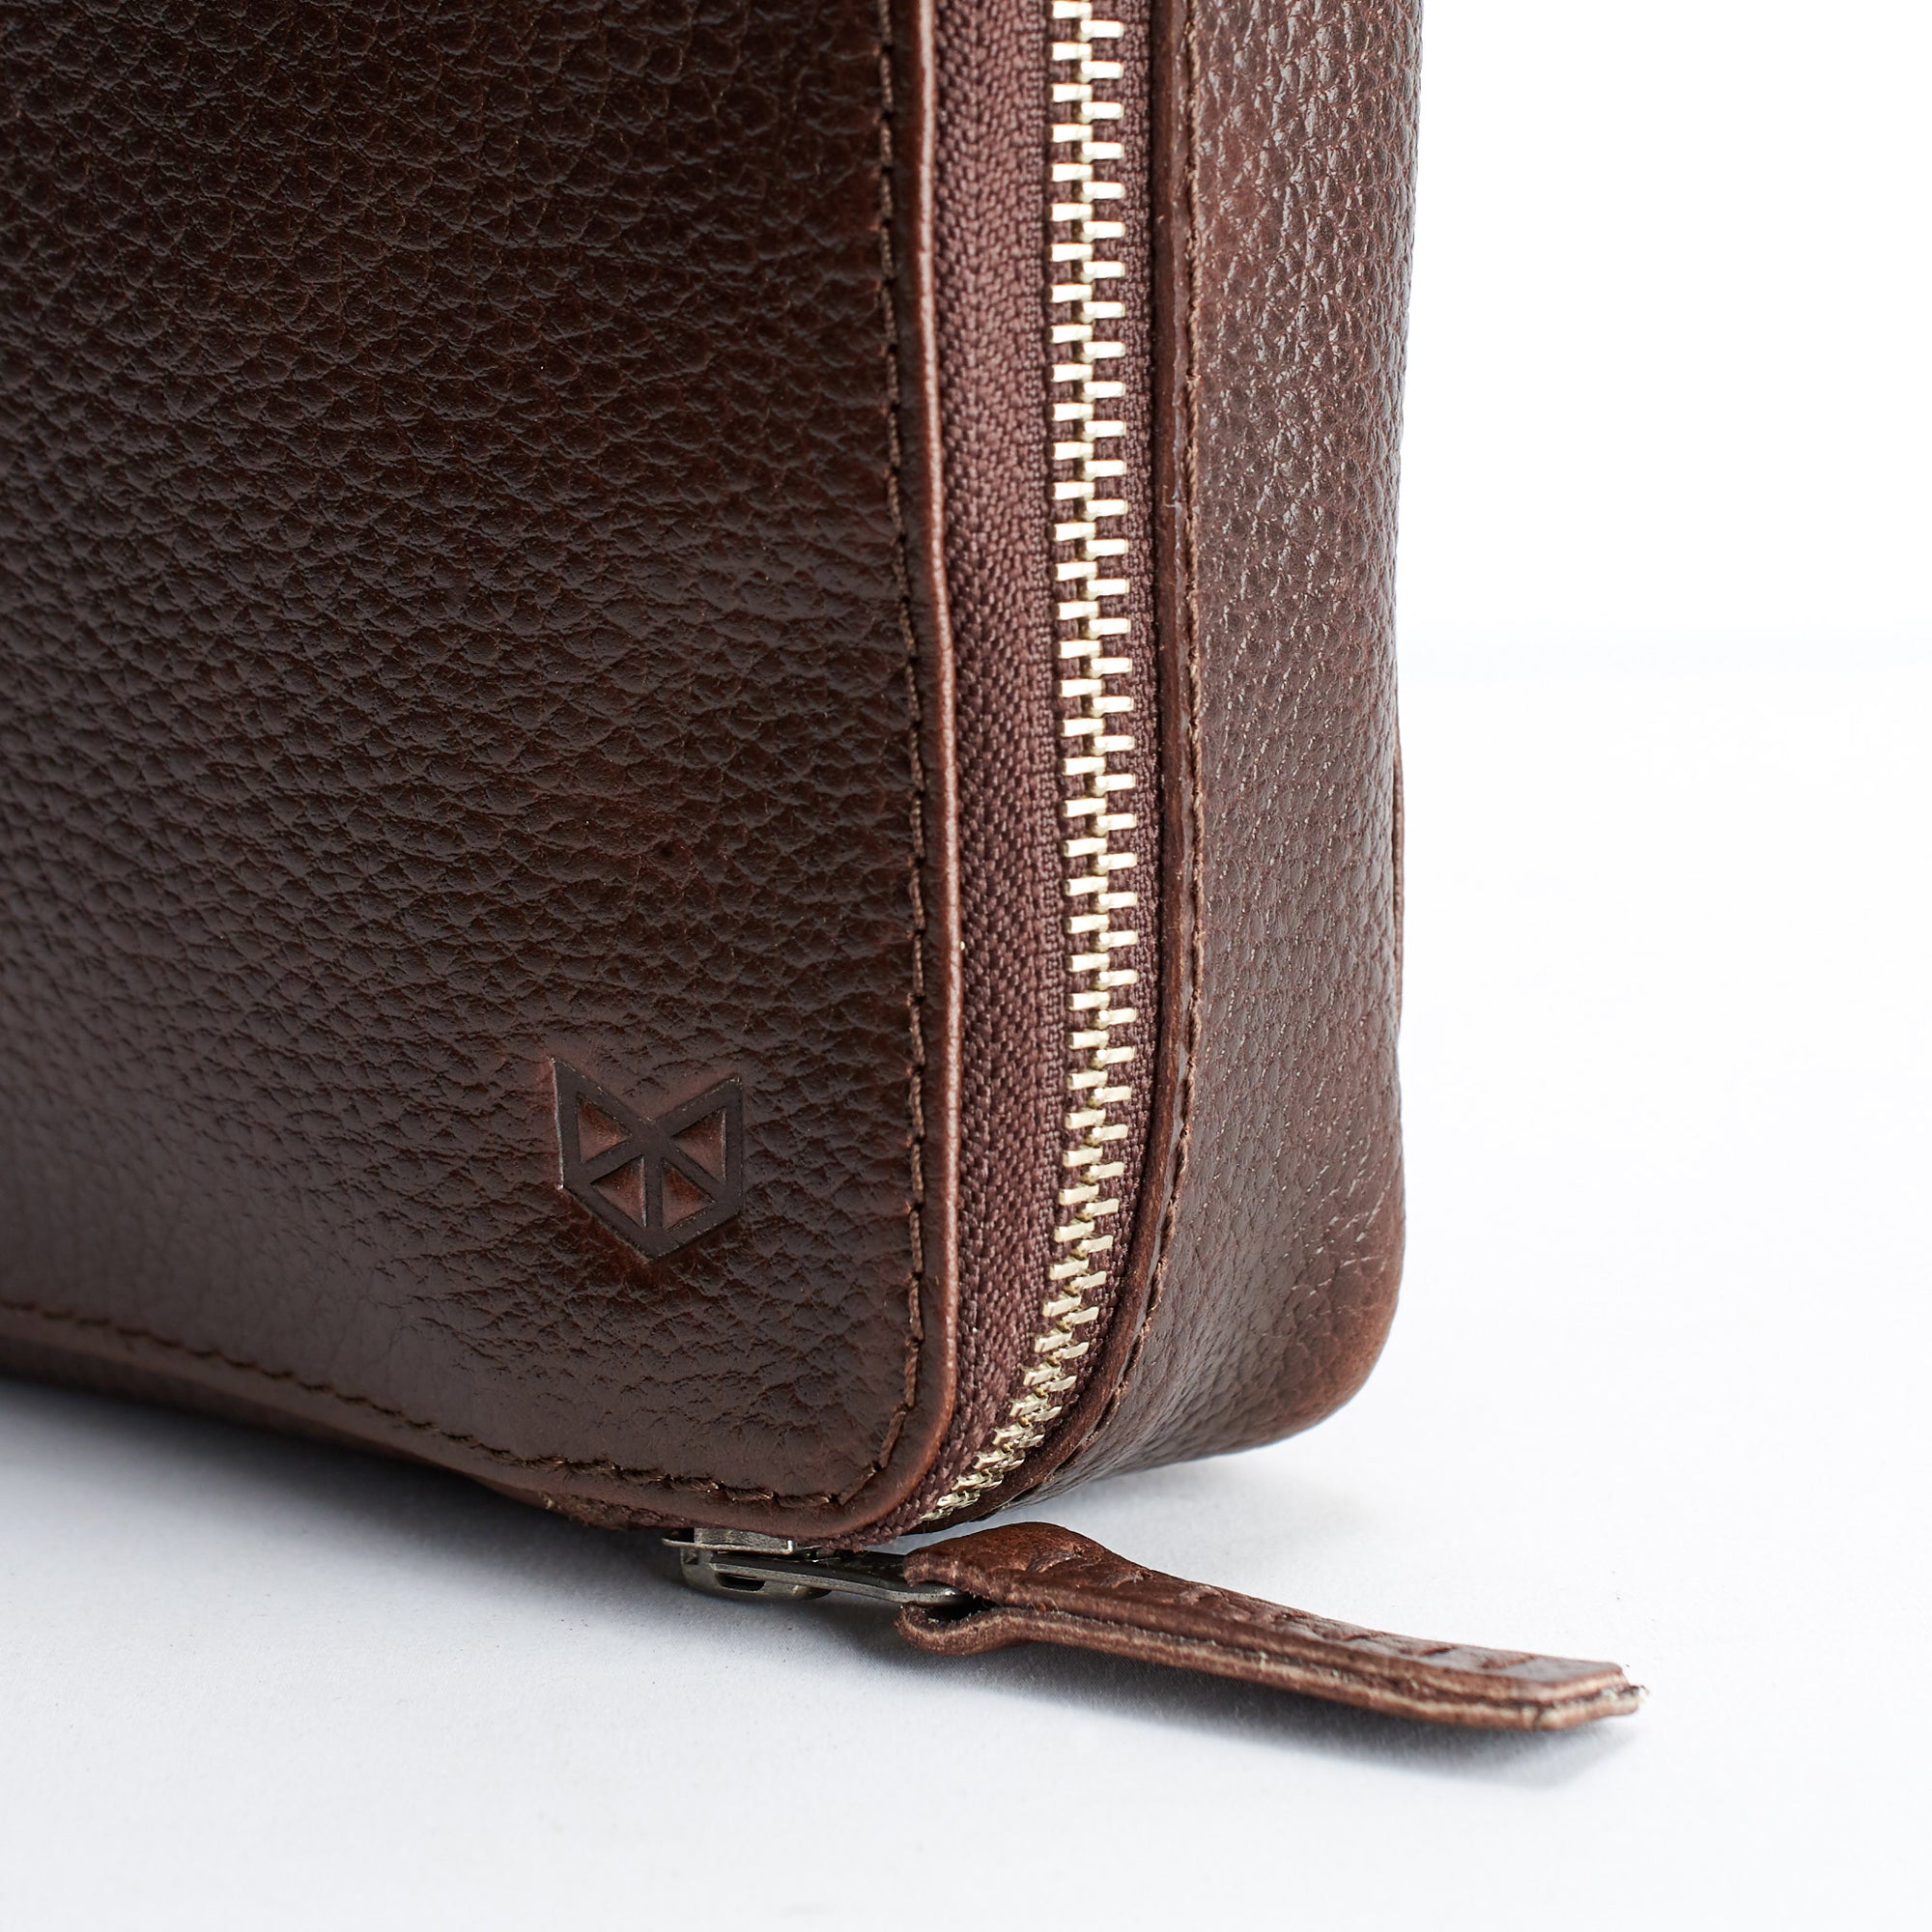 Engraved logo. Best edc laptop bag dark brown by Capra Leather